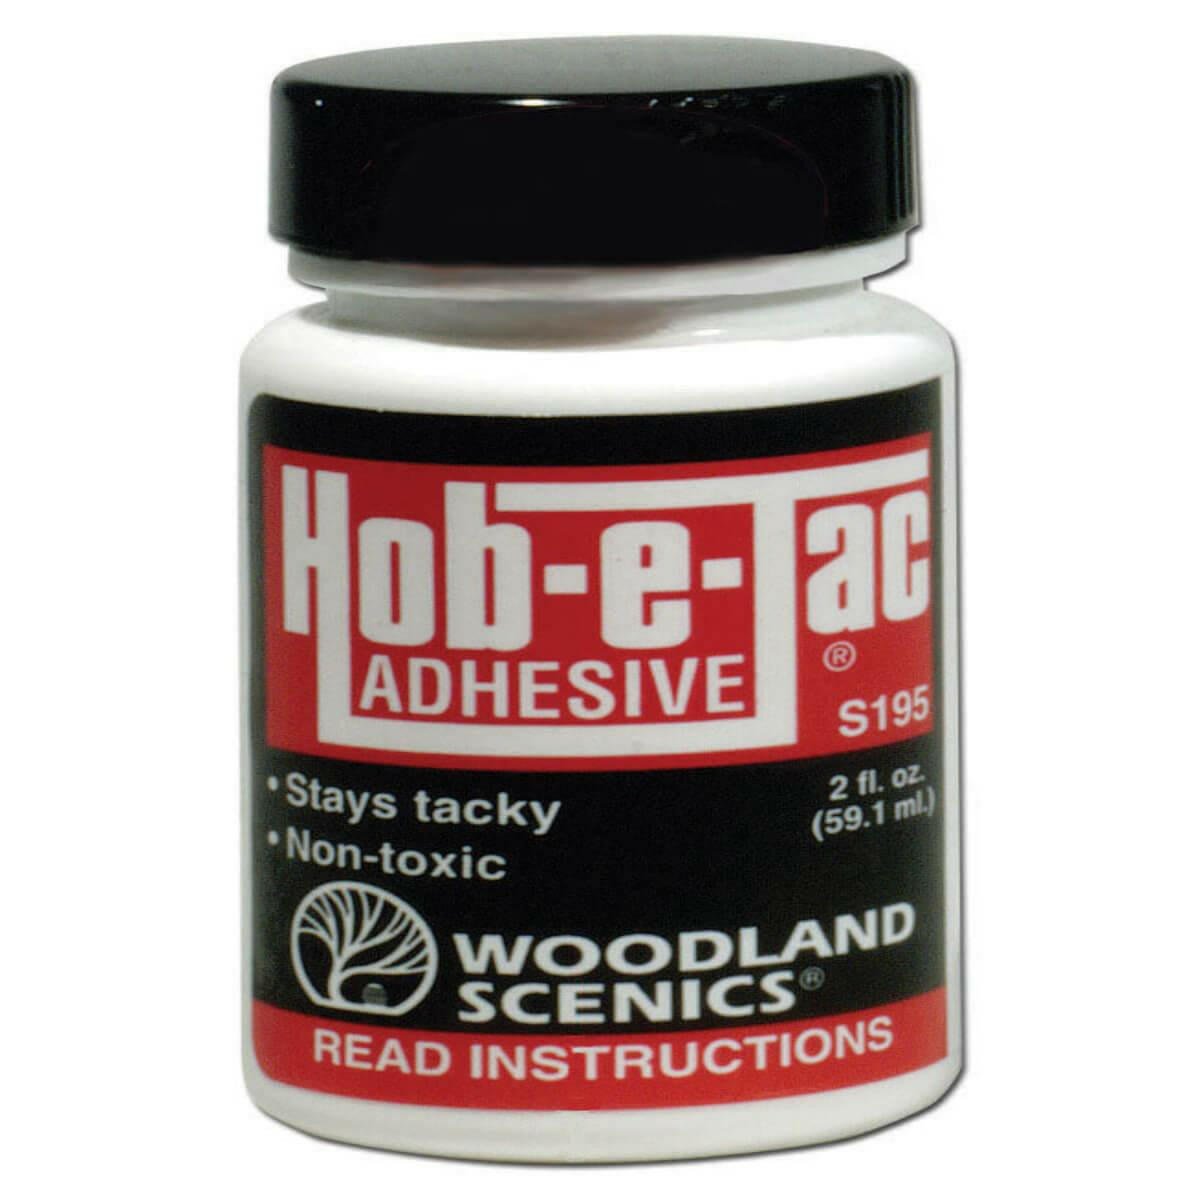 hob-e-tac adhesive glue for terrain